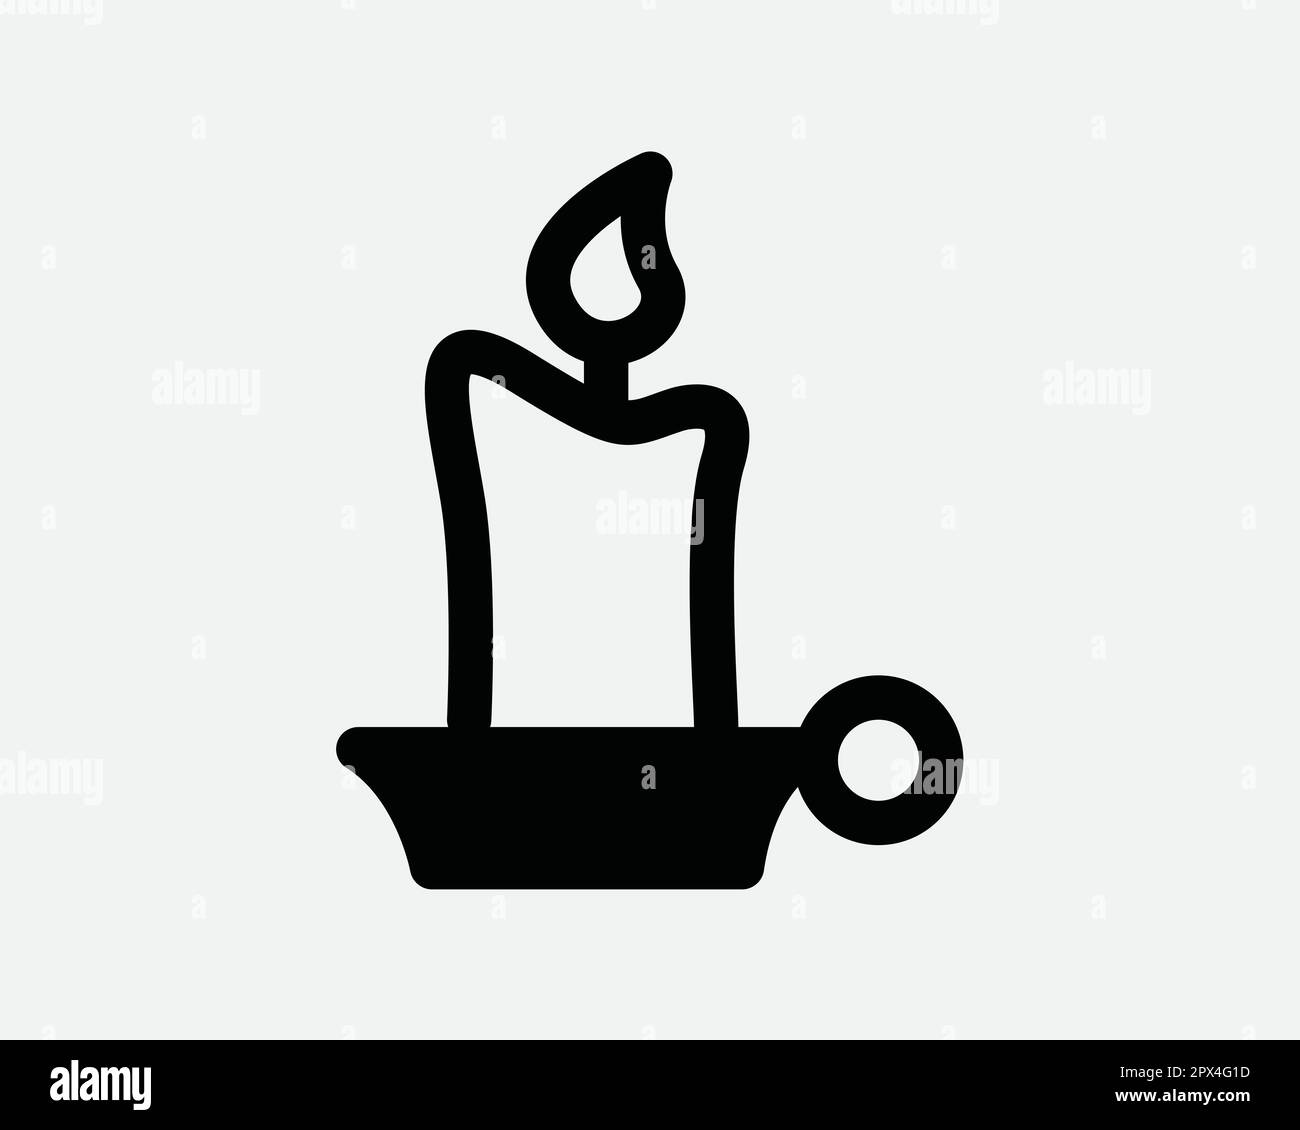 Kerzenhalter-Symbol. Schwarz-Weiß Kerzenhalter Kerzenlicht Lampe Brenner Nummernschildsymbol Kunstwerk Grafik Illustration Clipart Vector Cricut Stock Vektor